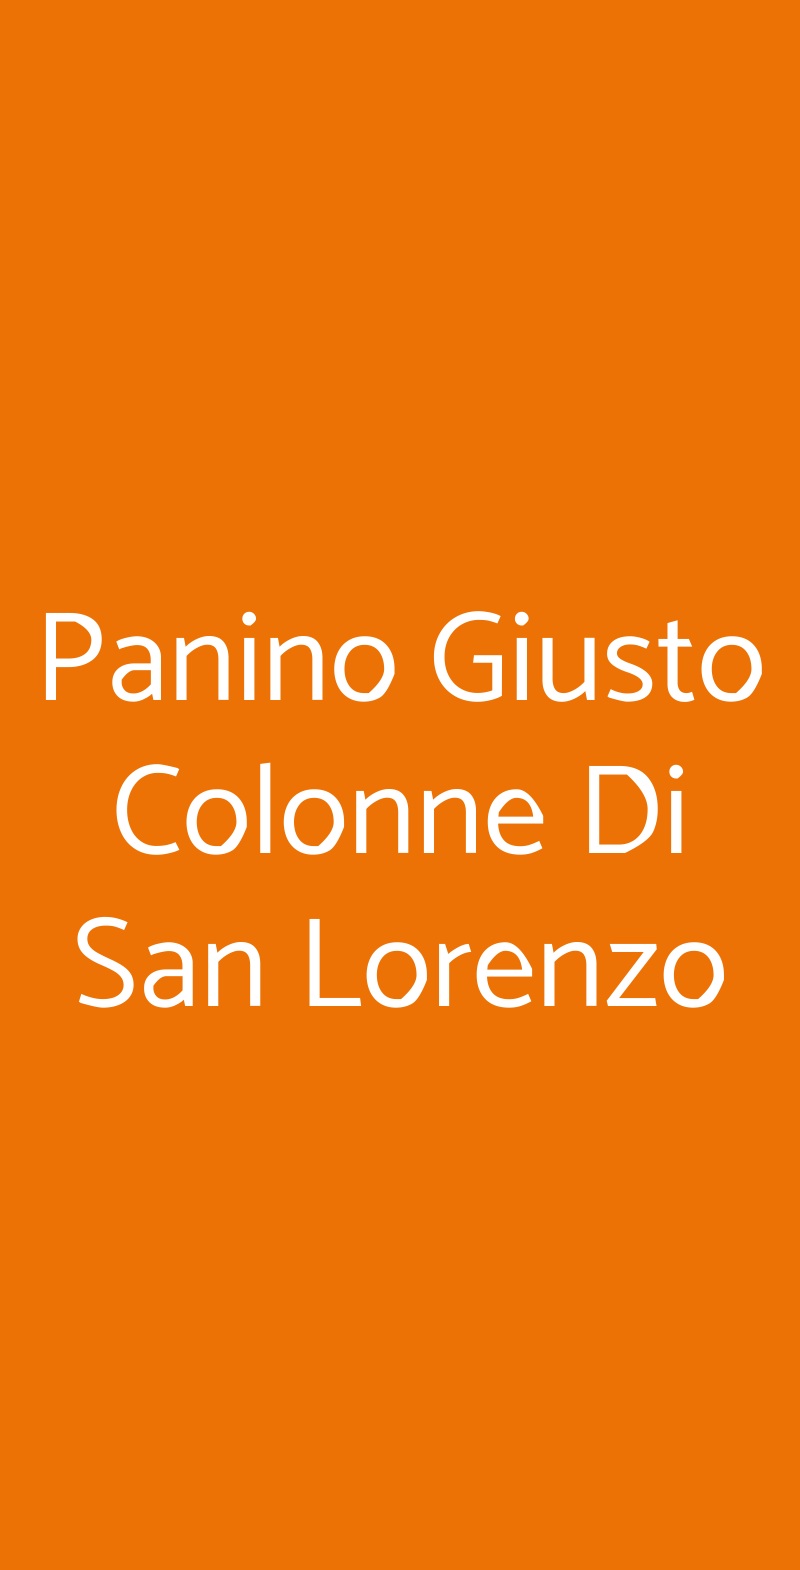 Panino Giusto Colonne Di San Lorenzo Milano menù 1 pagina